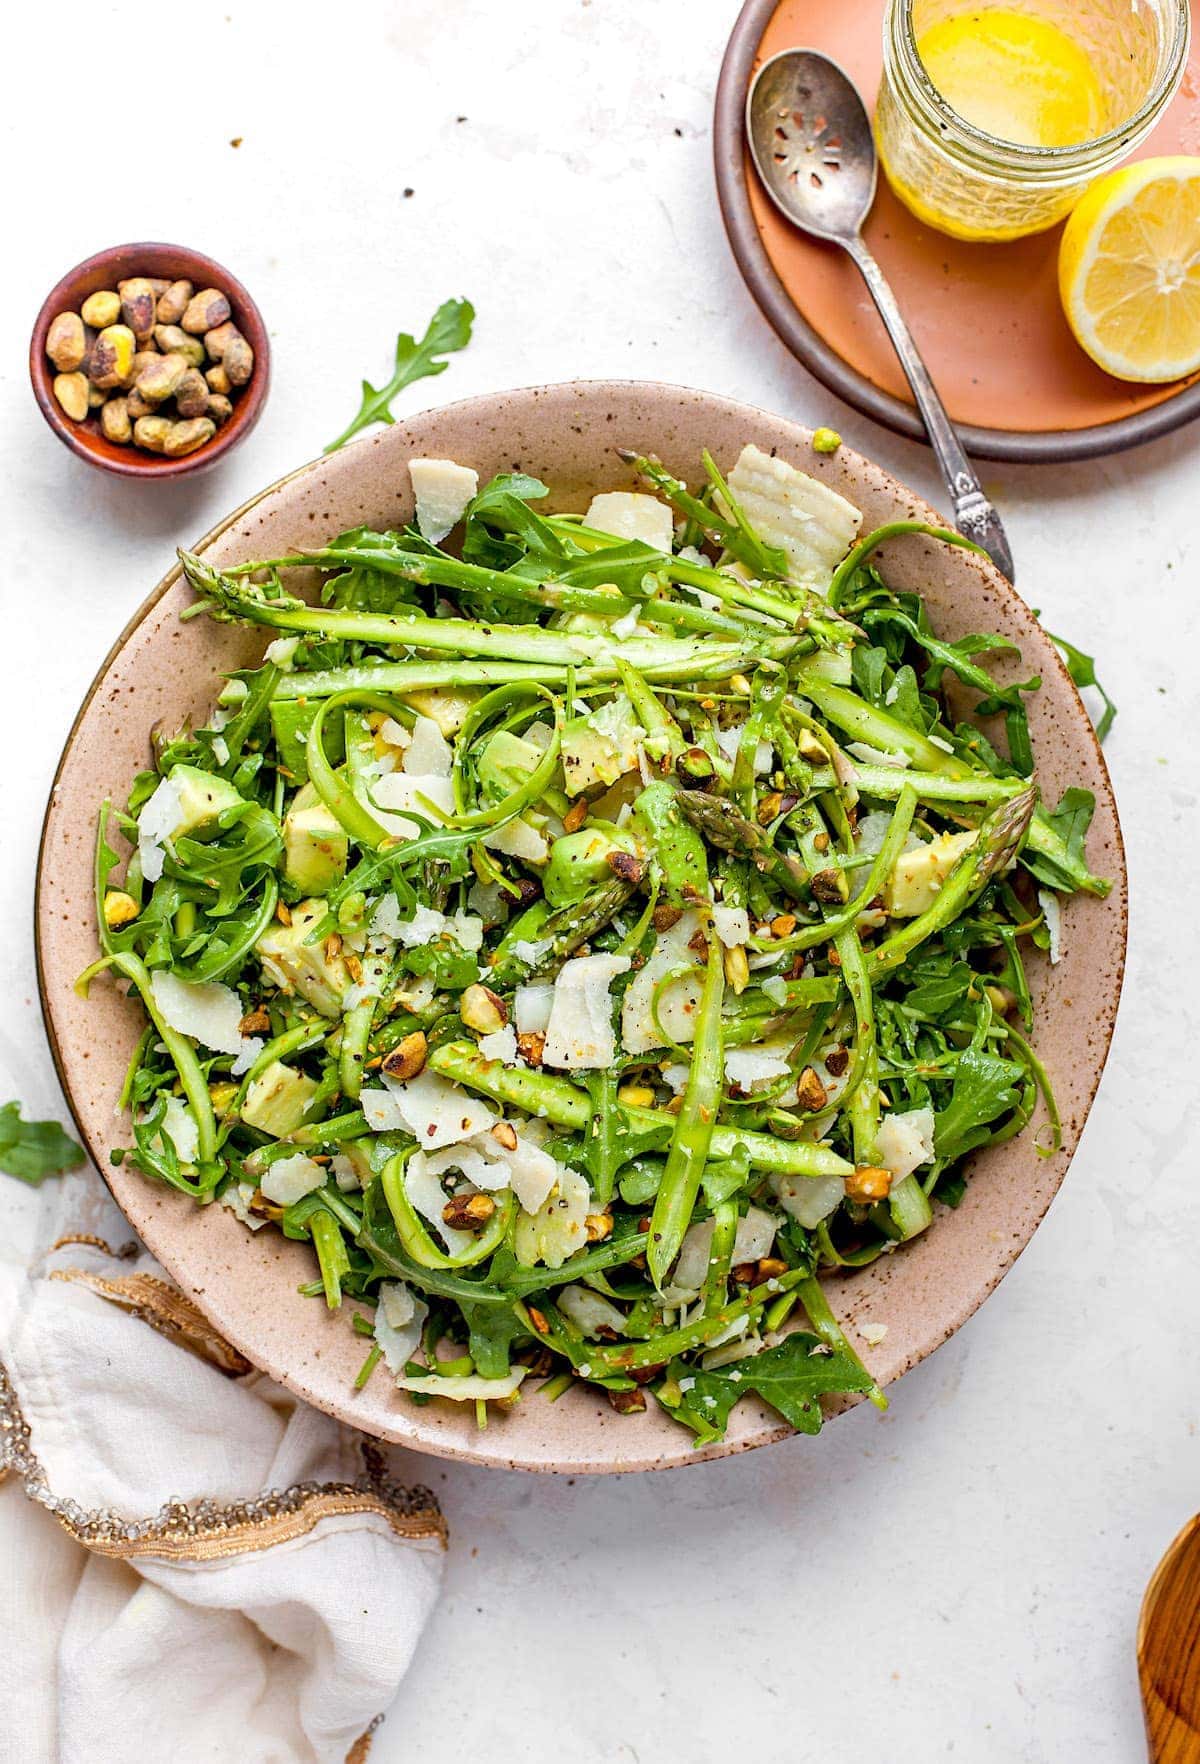 https://www.twopeasandtheirpod.com/wp-content/uploads/2020/04/Shaved-Asparagus-Salad-5.jpg